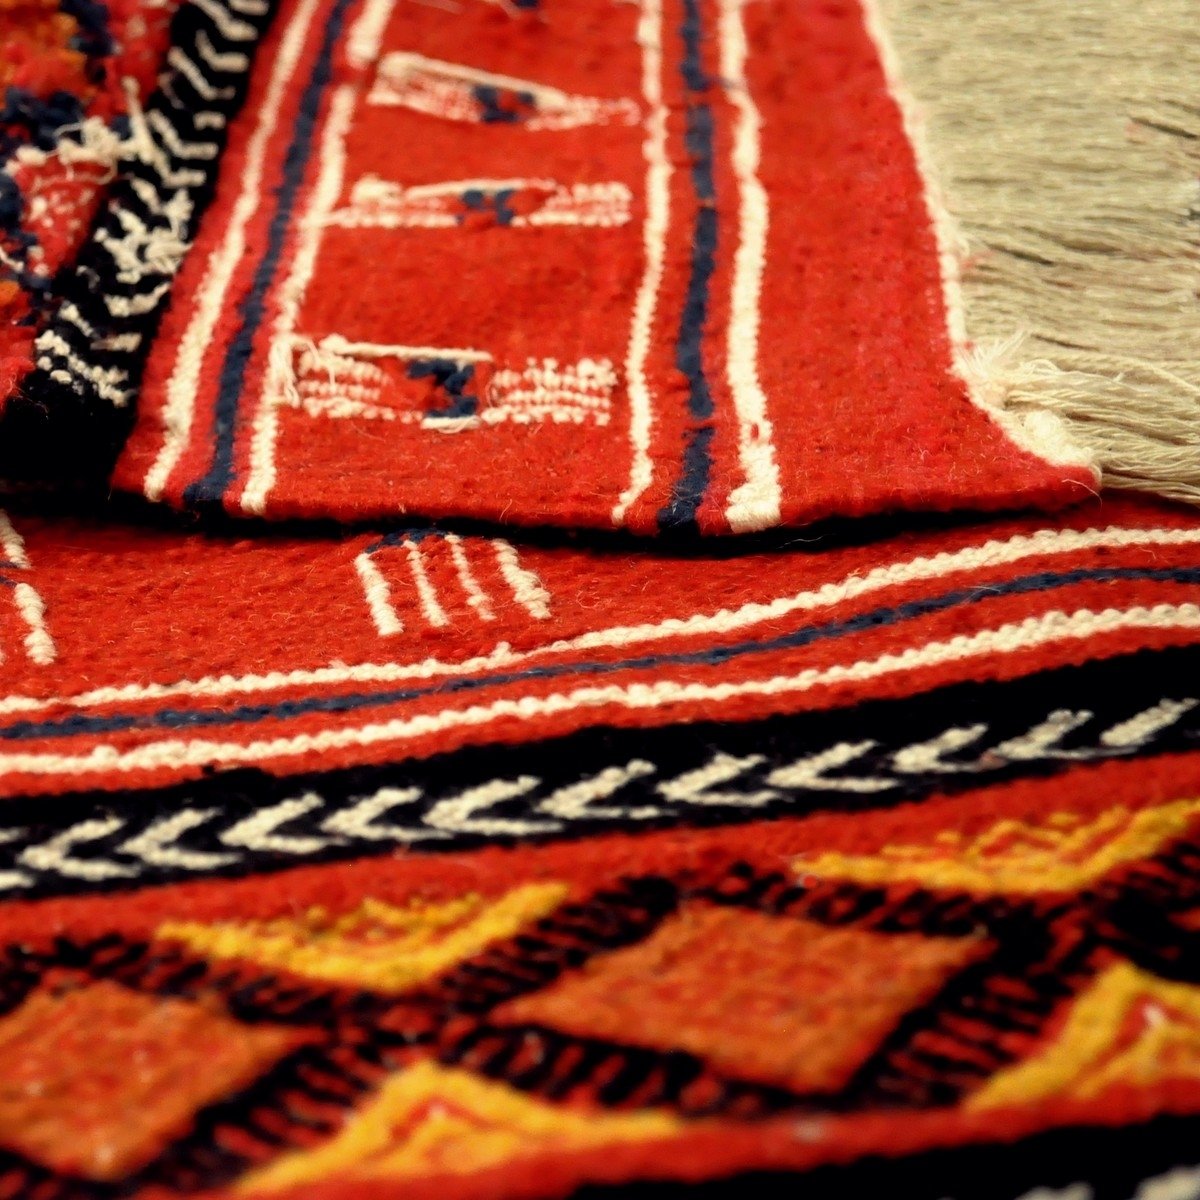 Tapete berbere Tapete Kilim longo Babmnara 60x200 Vermelho (Tecidos à mão, Lã, Tunísia) Tapete tunisiano kilim, estilo marroquin